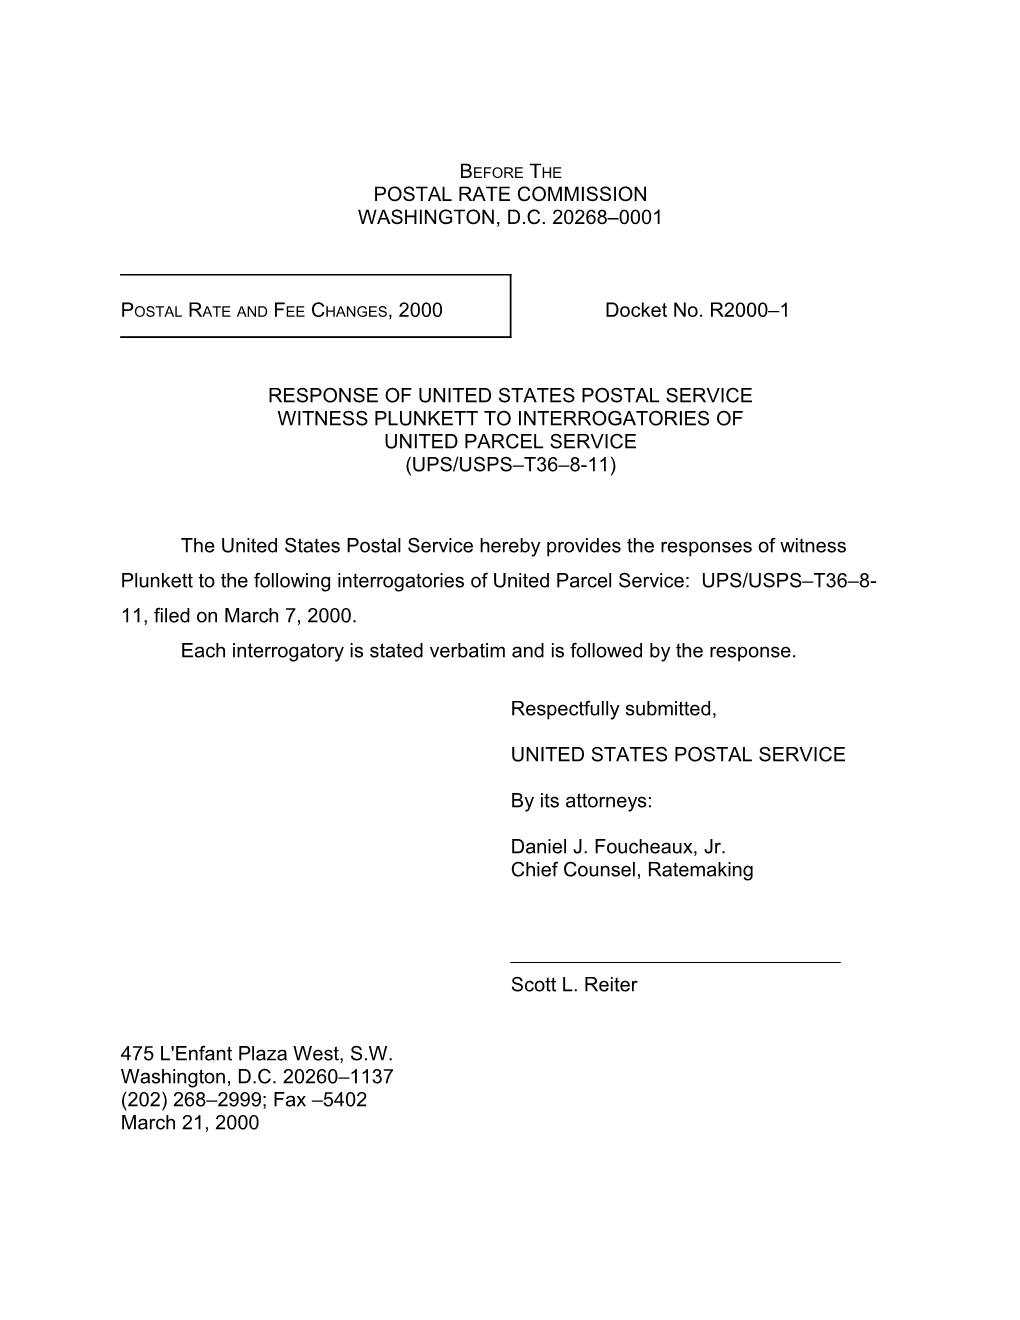 Response of United States Postal Service Witness Plunkett to Interrogatories of United